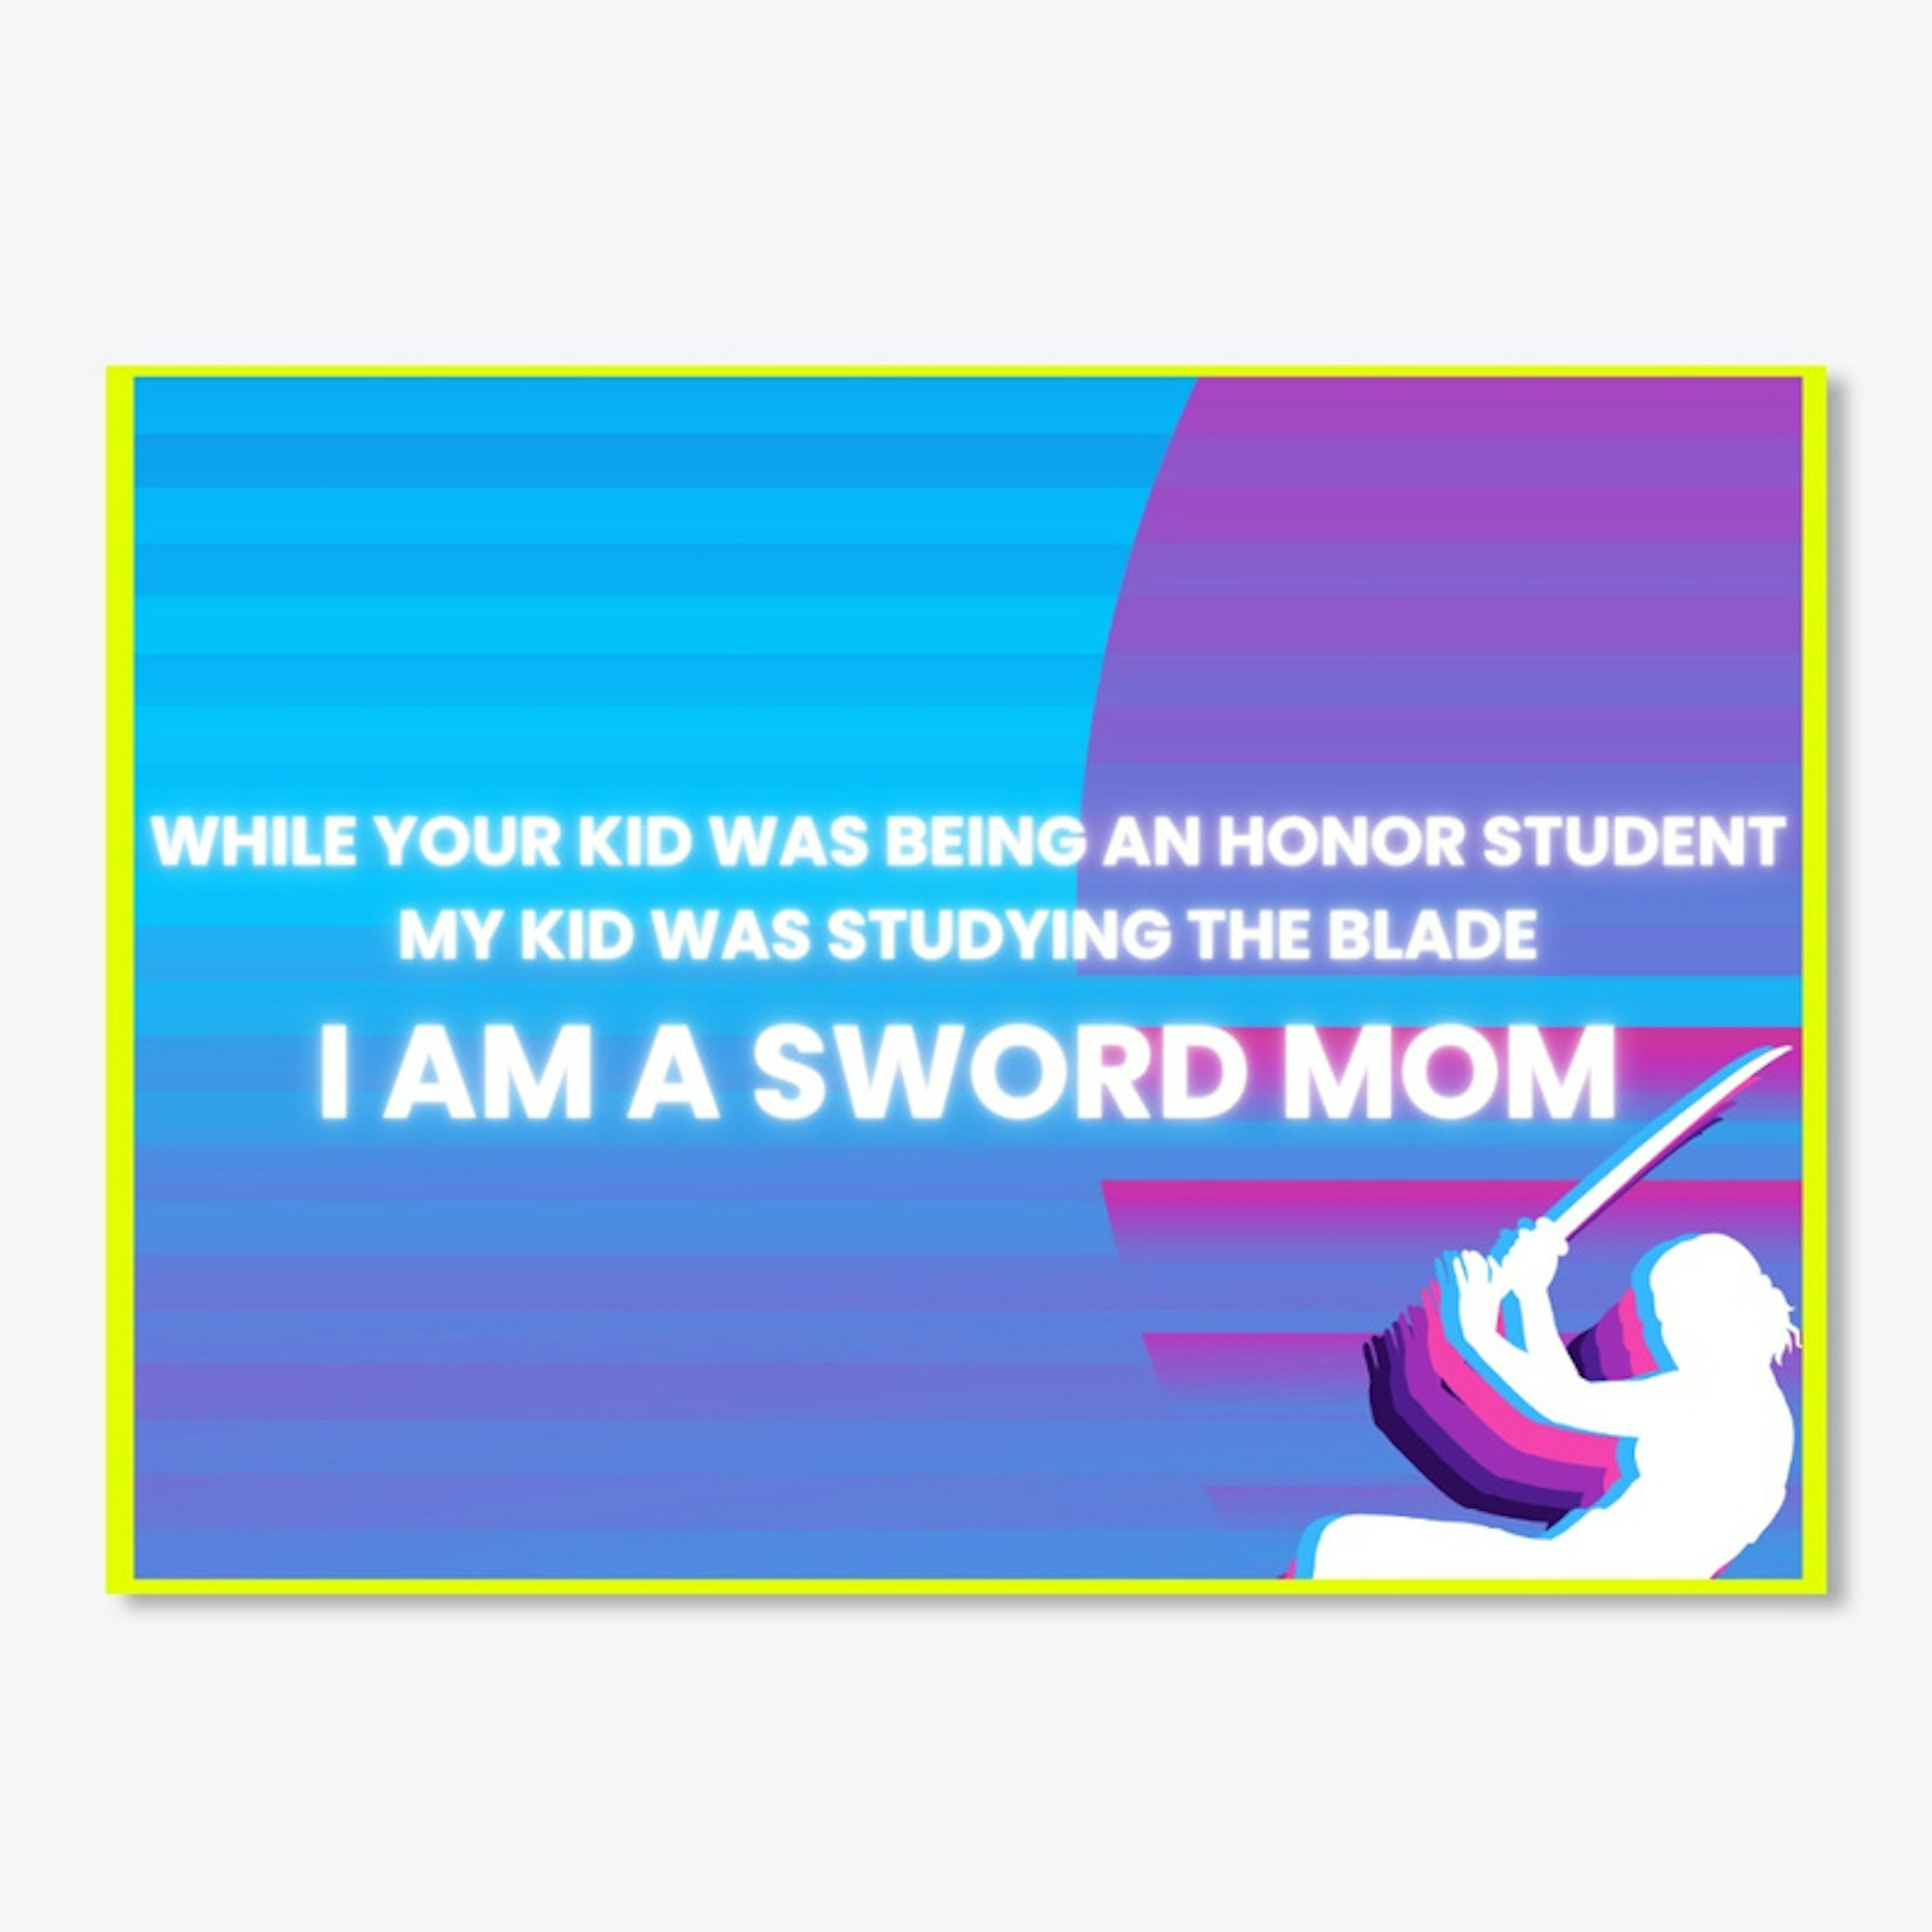 Sword Mom (Kid Studied the Blade)